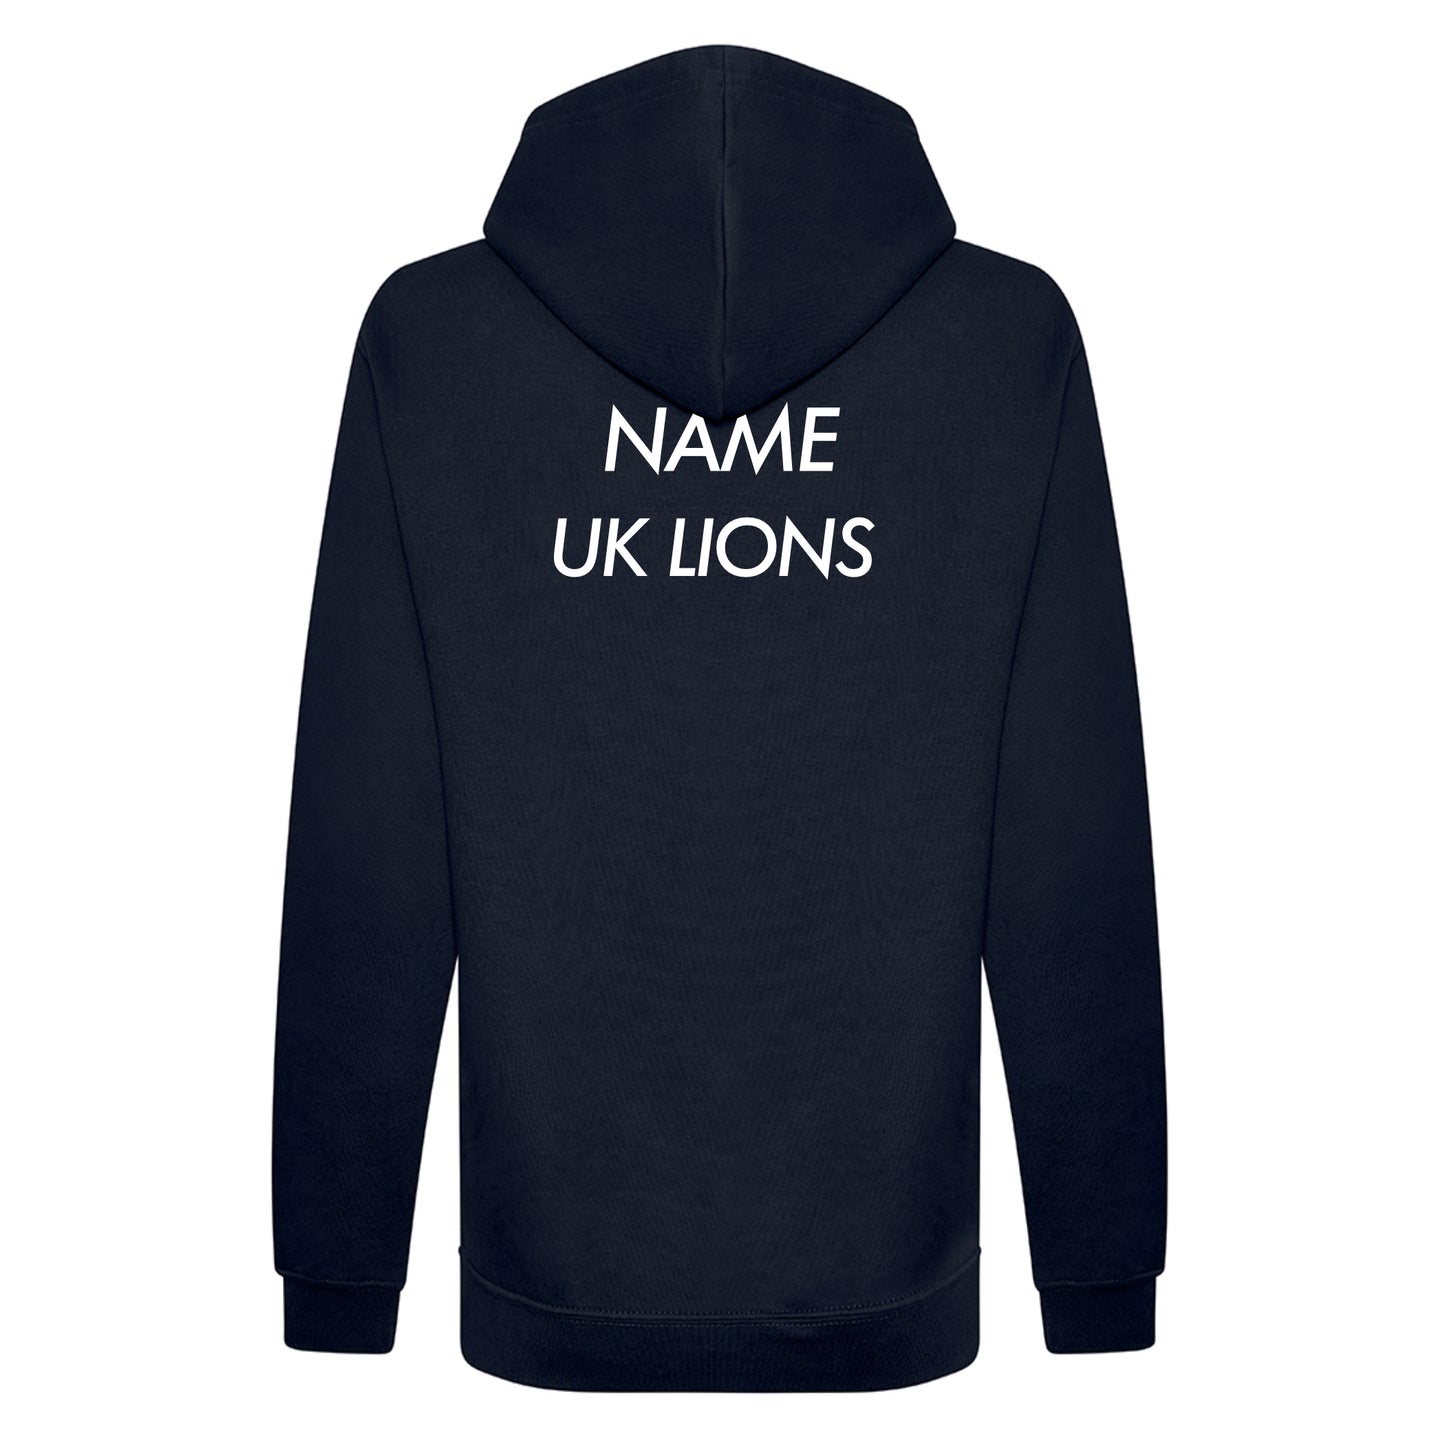 UK Lions - Hoody Unisex Navy